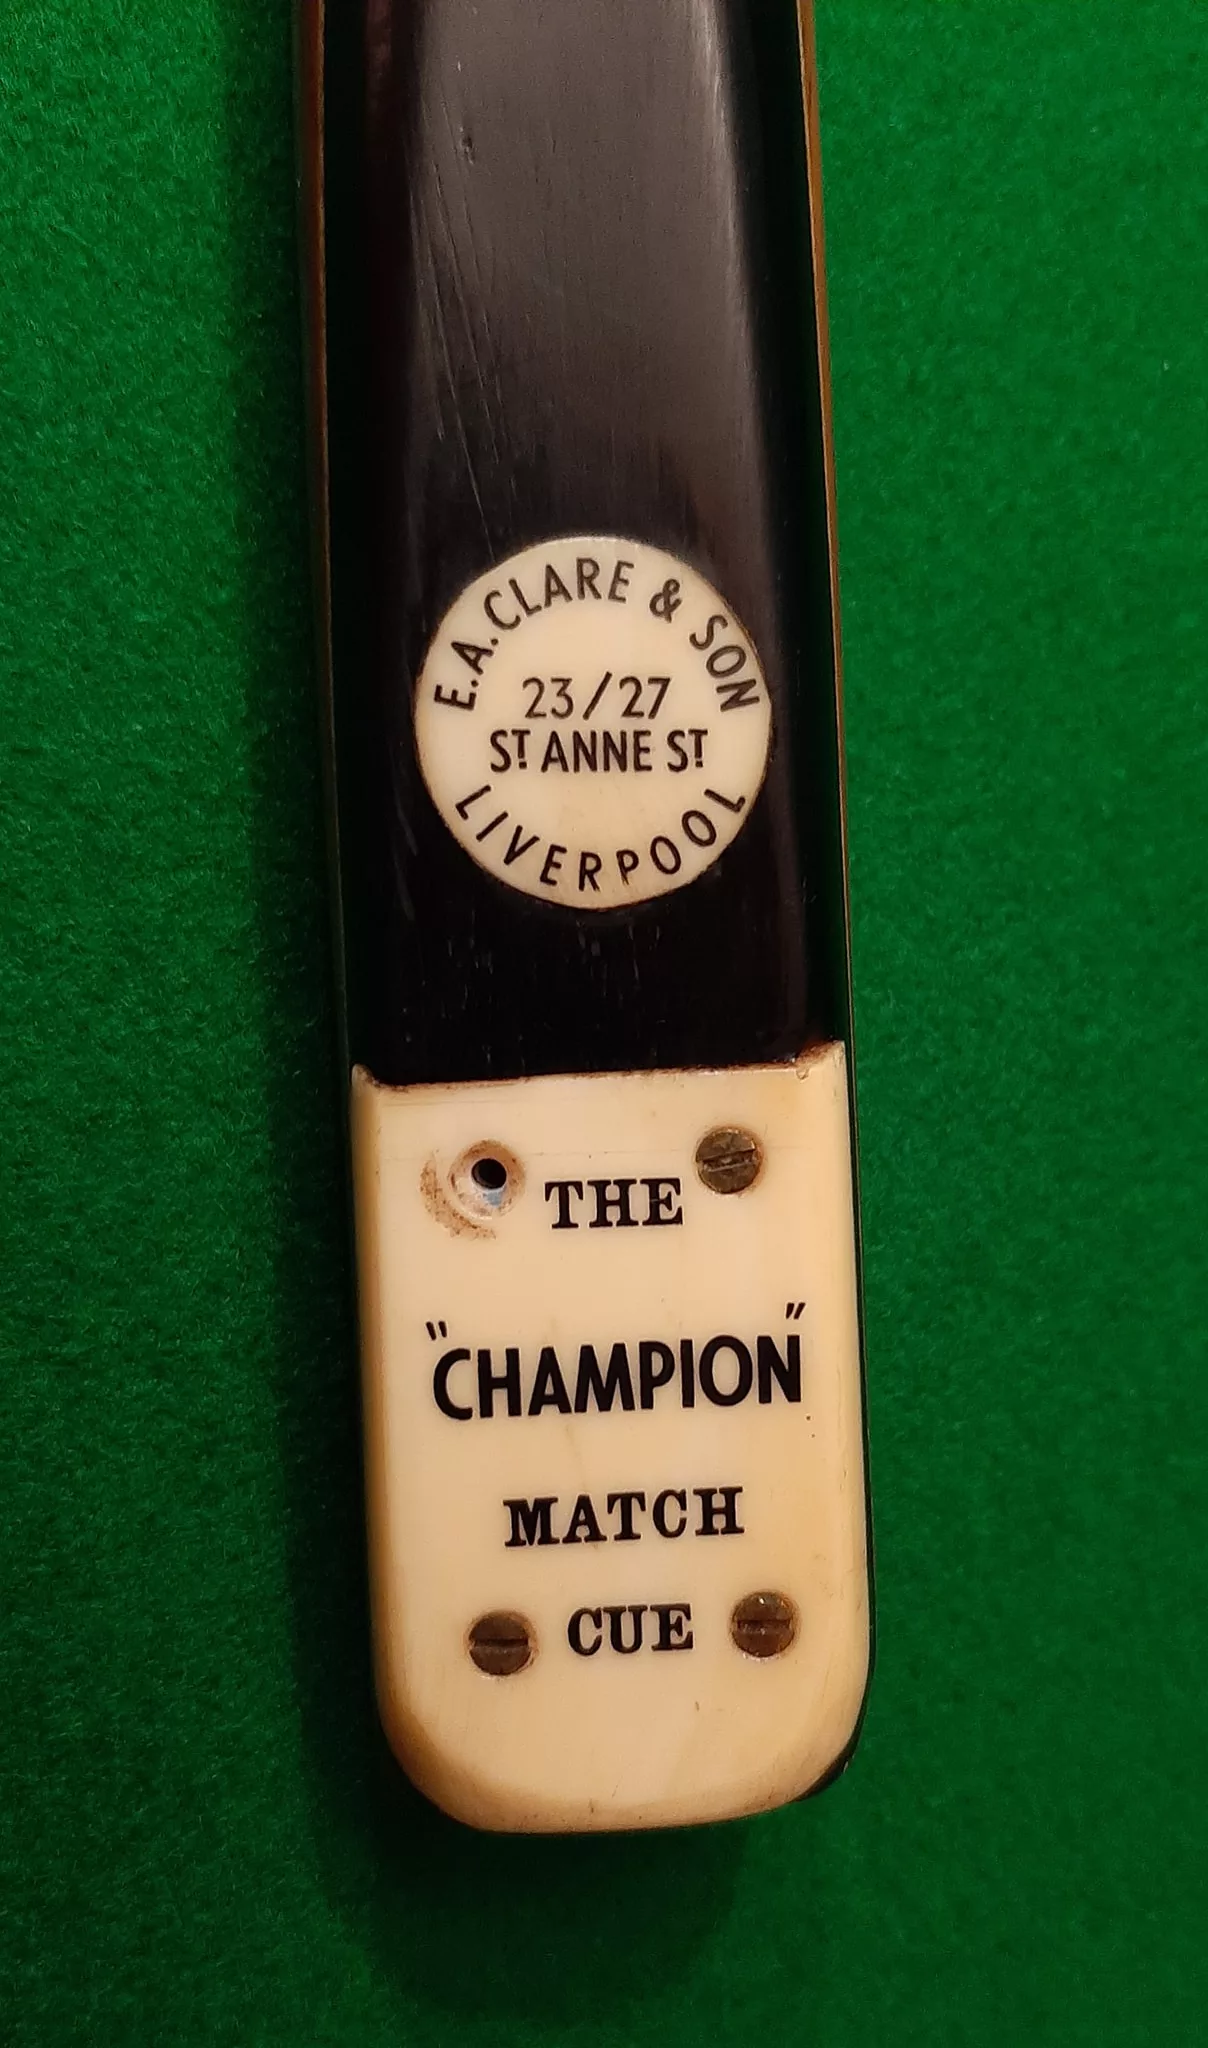 Clare Champion Match cue